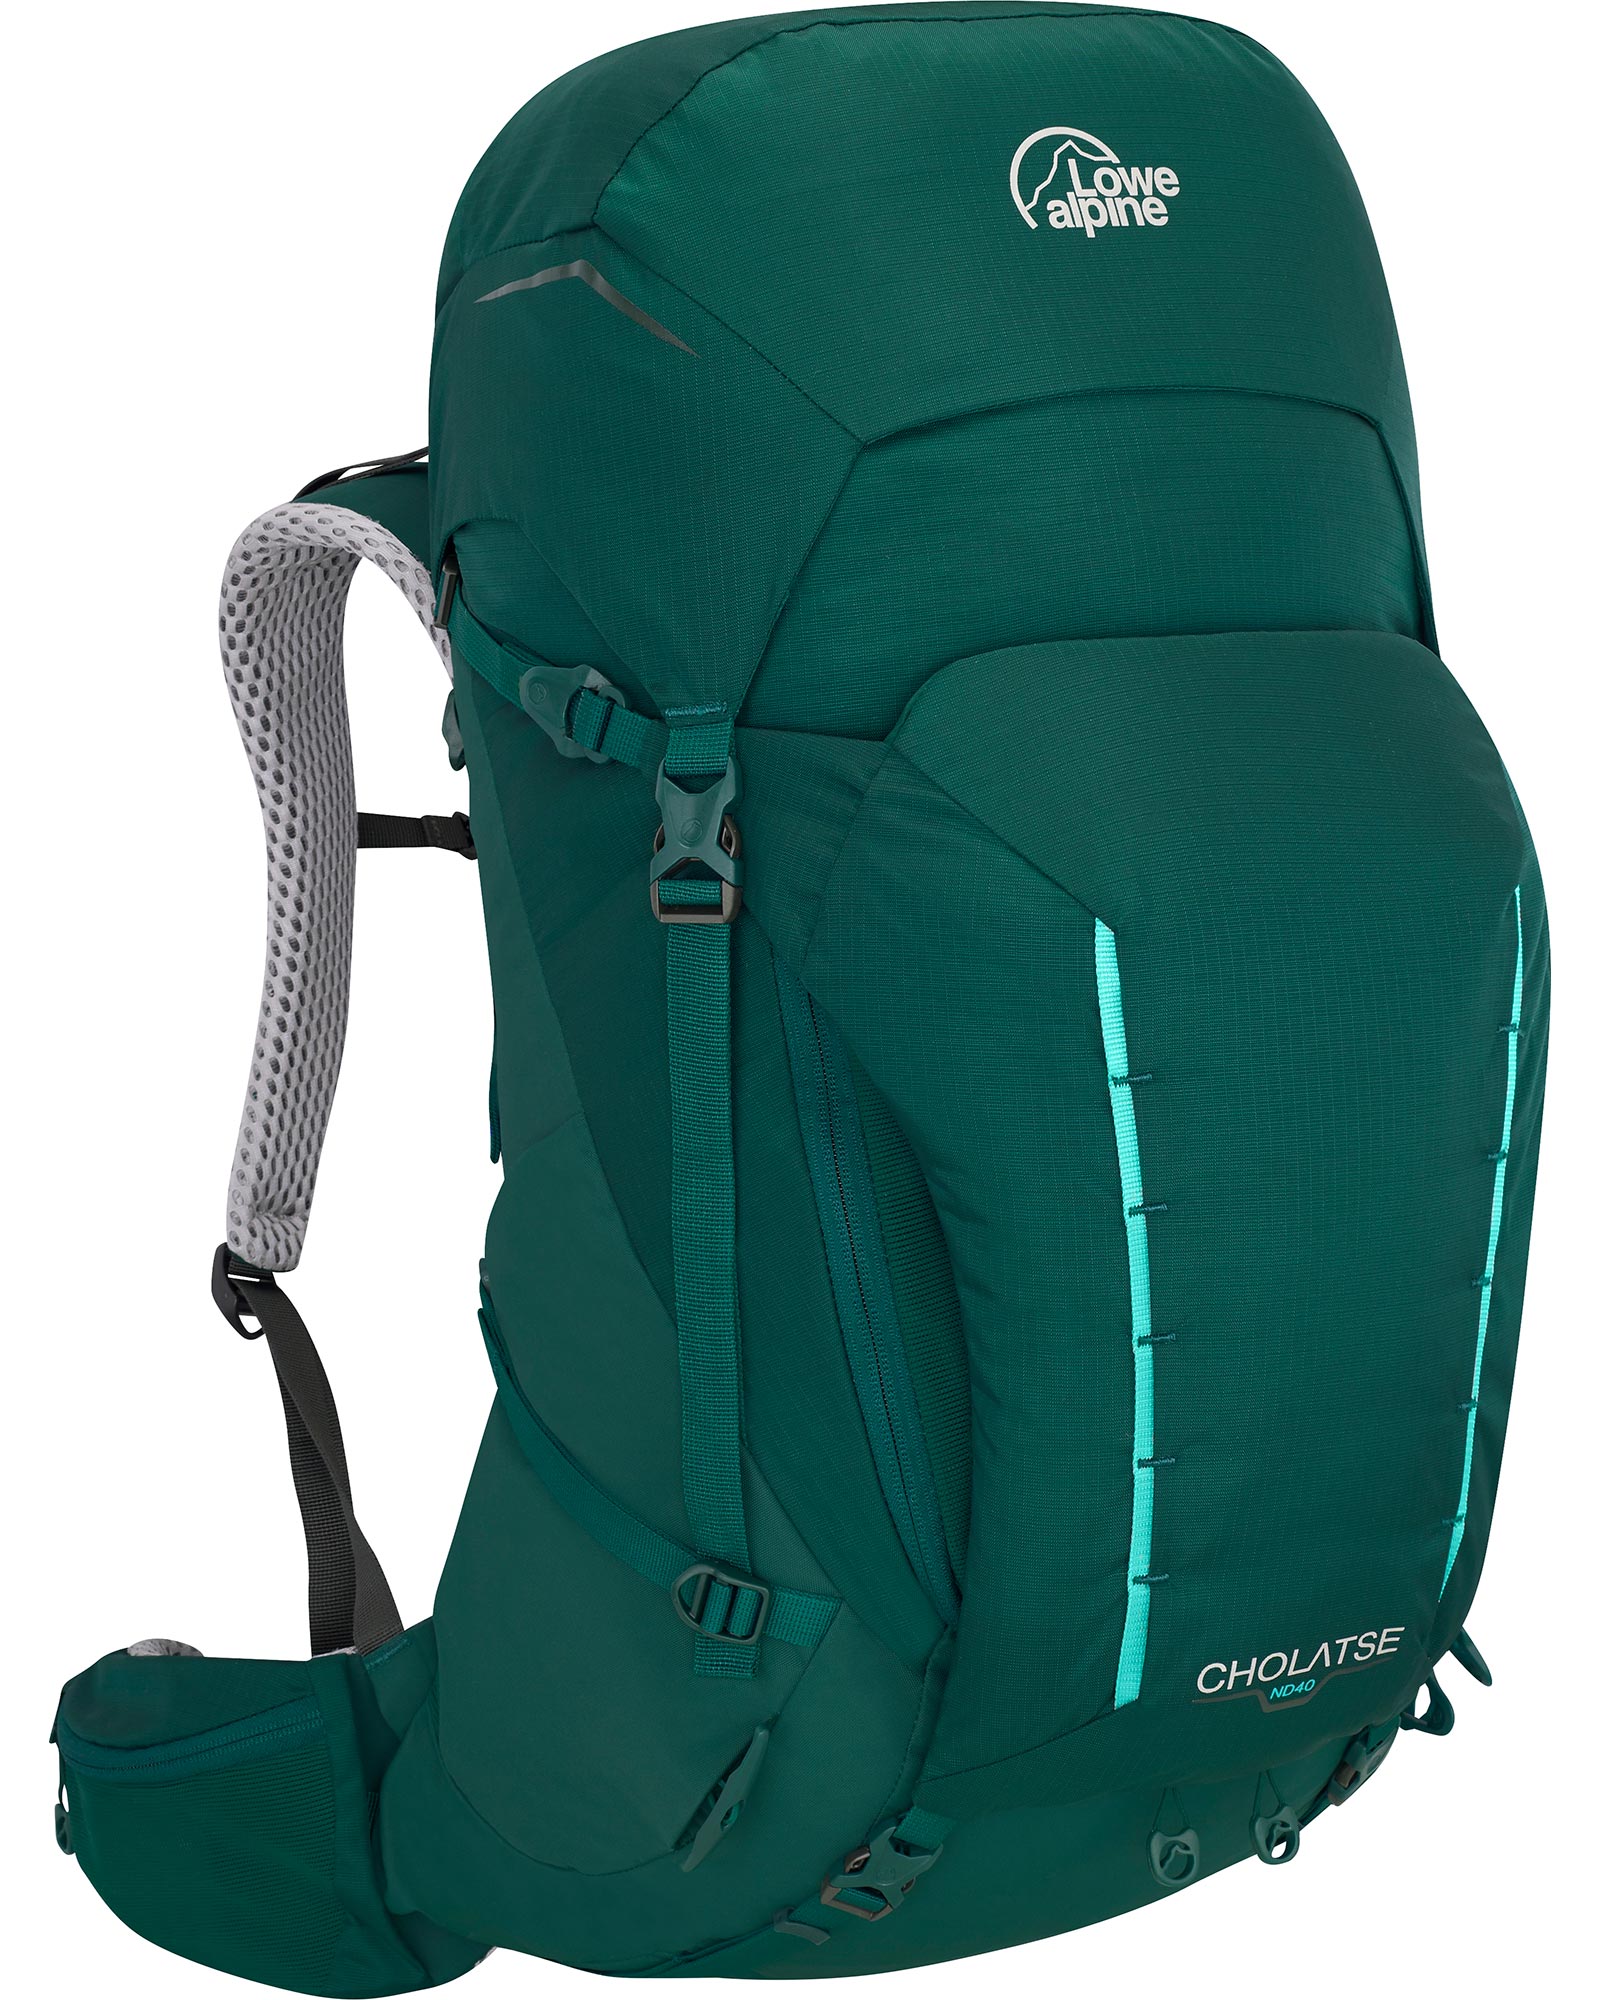 Lowe Alpine Cholatse ND40:45 Women’s Backpack - Teal